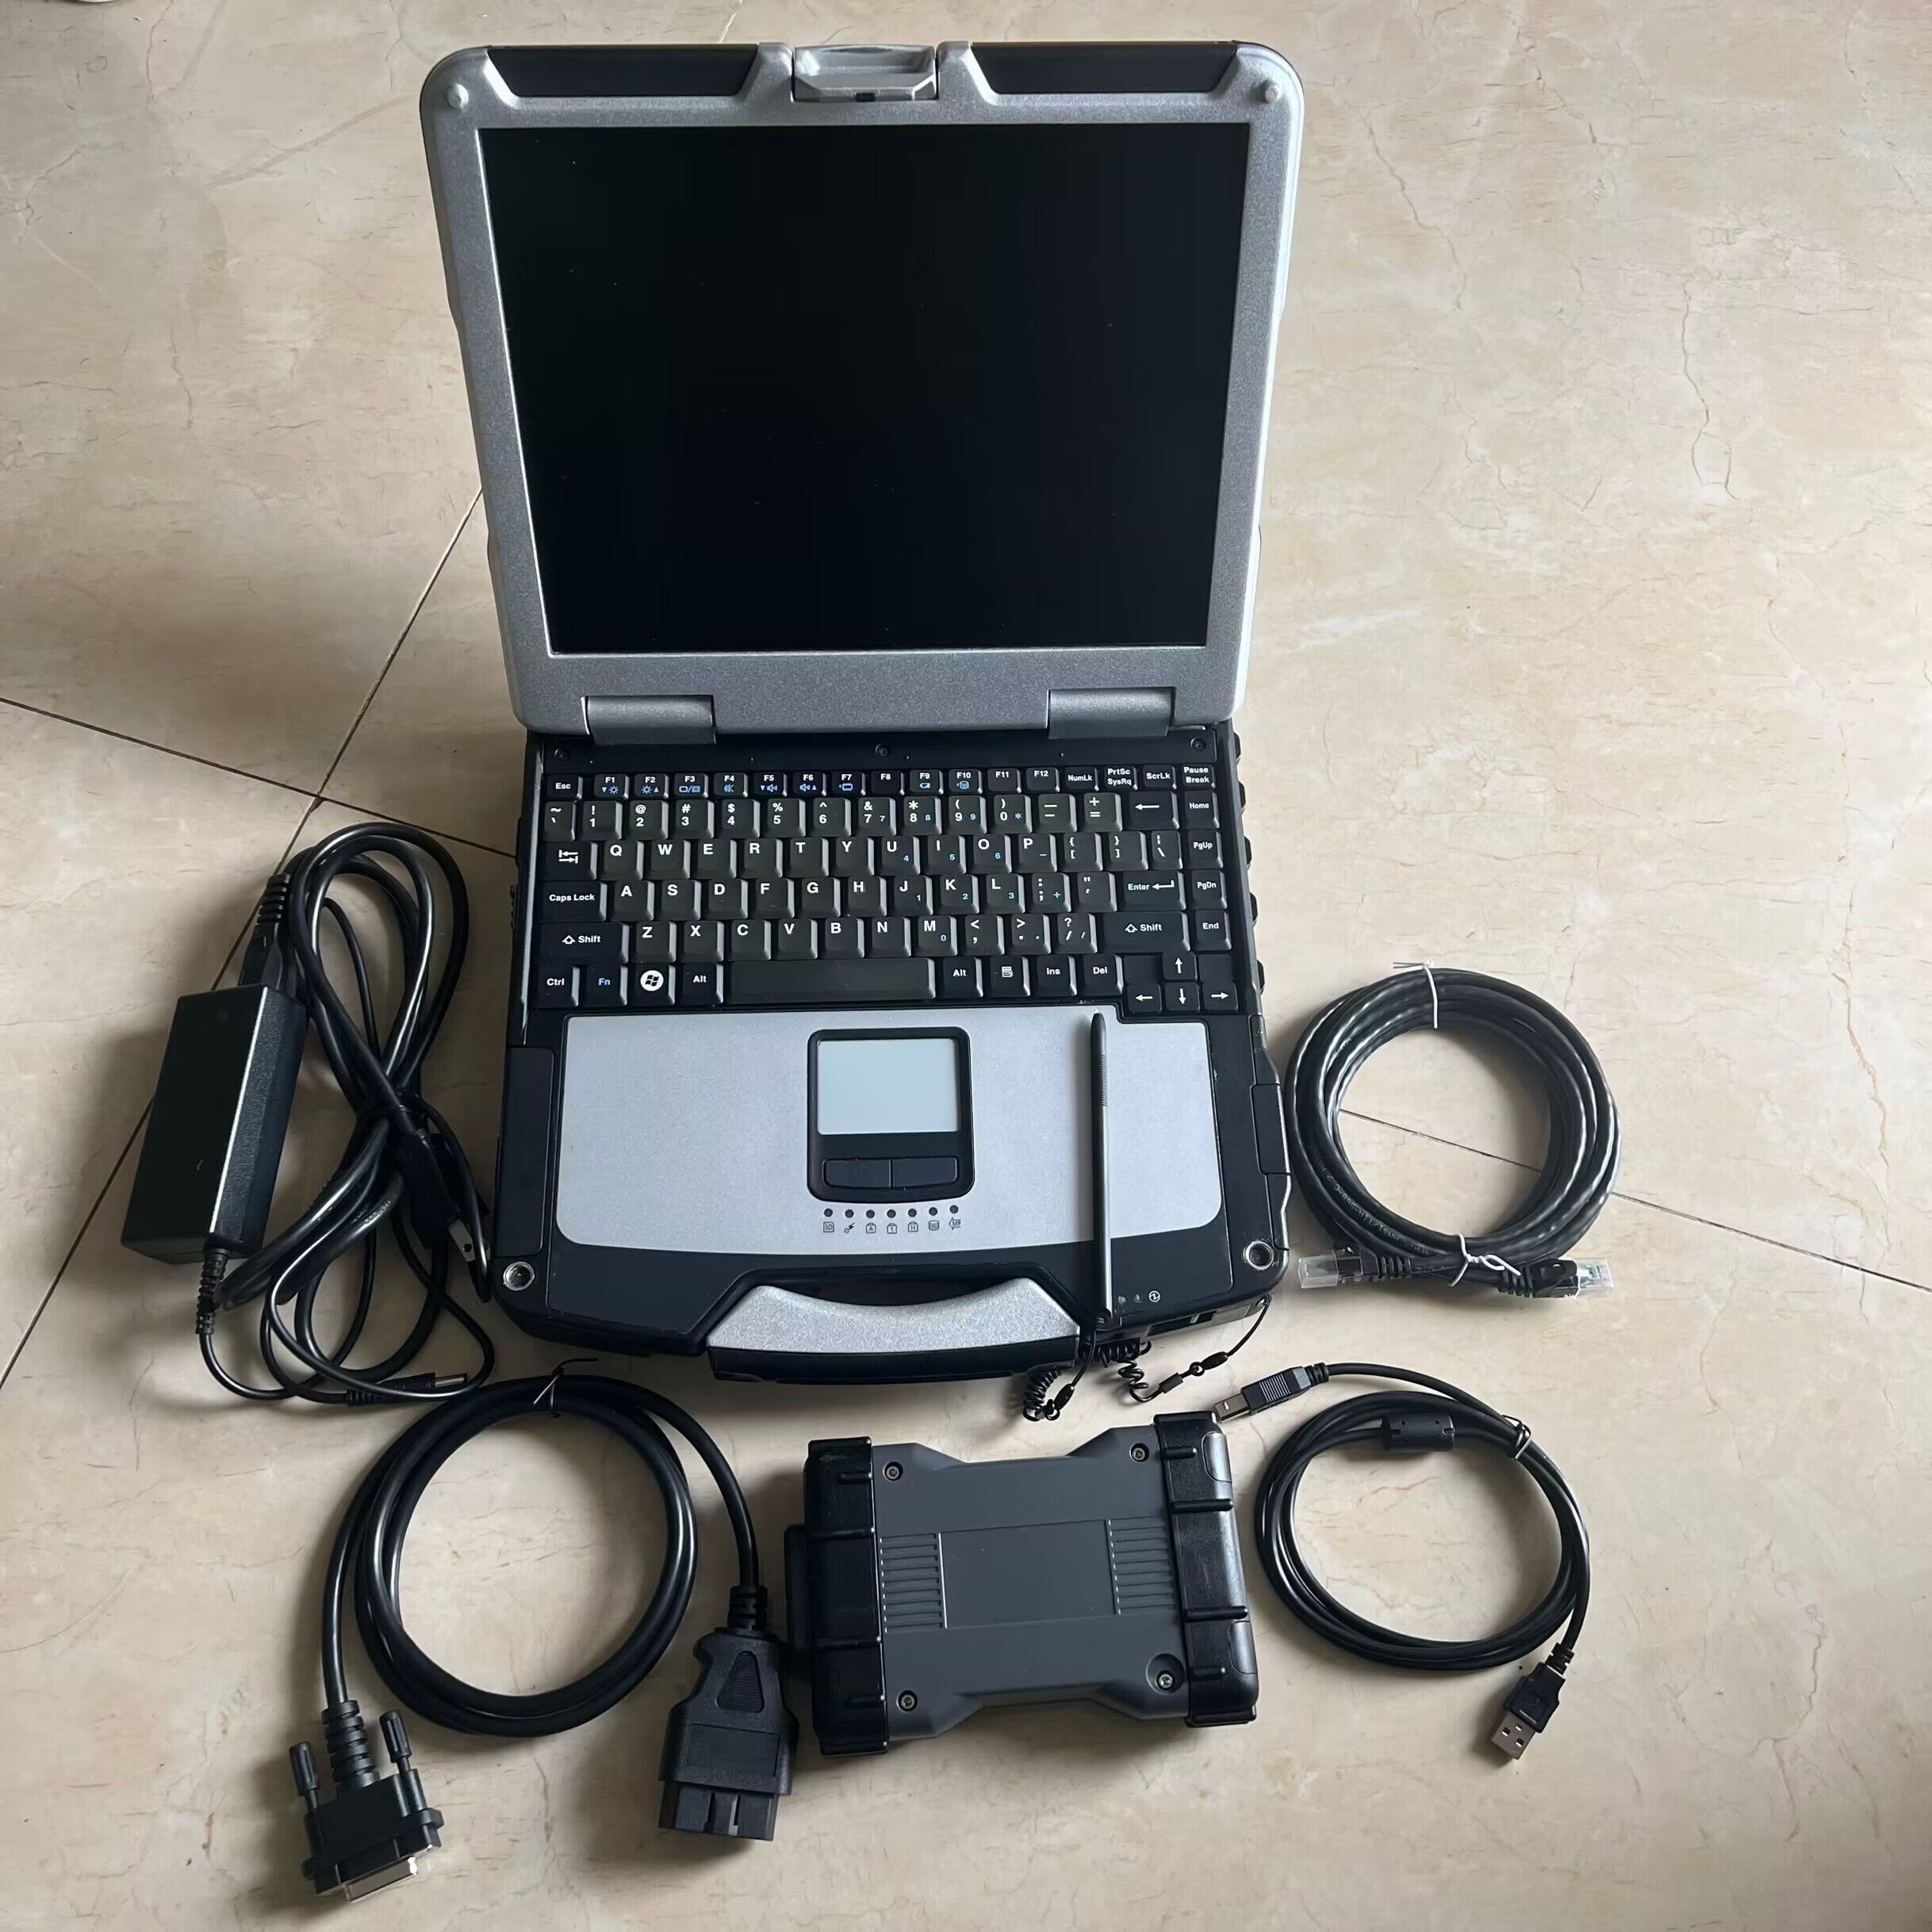 WiFi MB Star Diagnostic C6 SD Tool VCI Can DOIP Protocol SSD 480 GB Xentry DAS Laptop CF30 Touch Computer redo att använda 2 års garanti